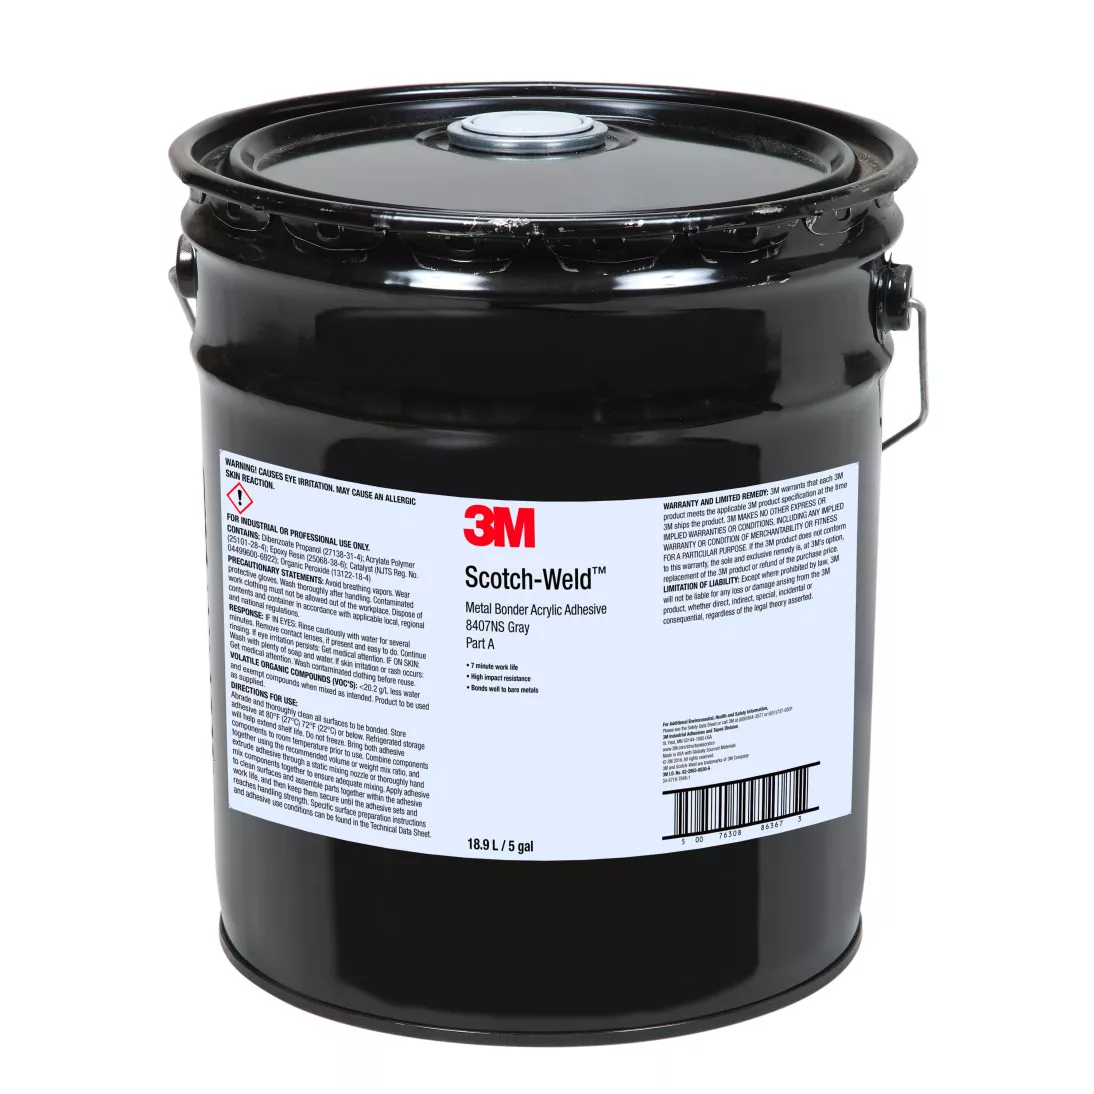 3M™ Scotch-Weld™ Metal Bonder Acrylic Adhesive Bead Free 8407NS Gray,
Part A, 5 Gallon Drum (Pail)